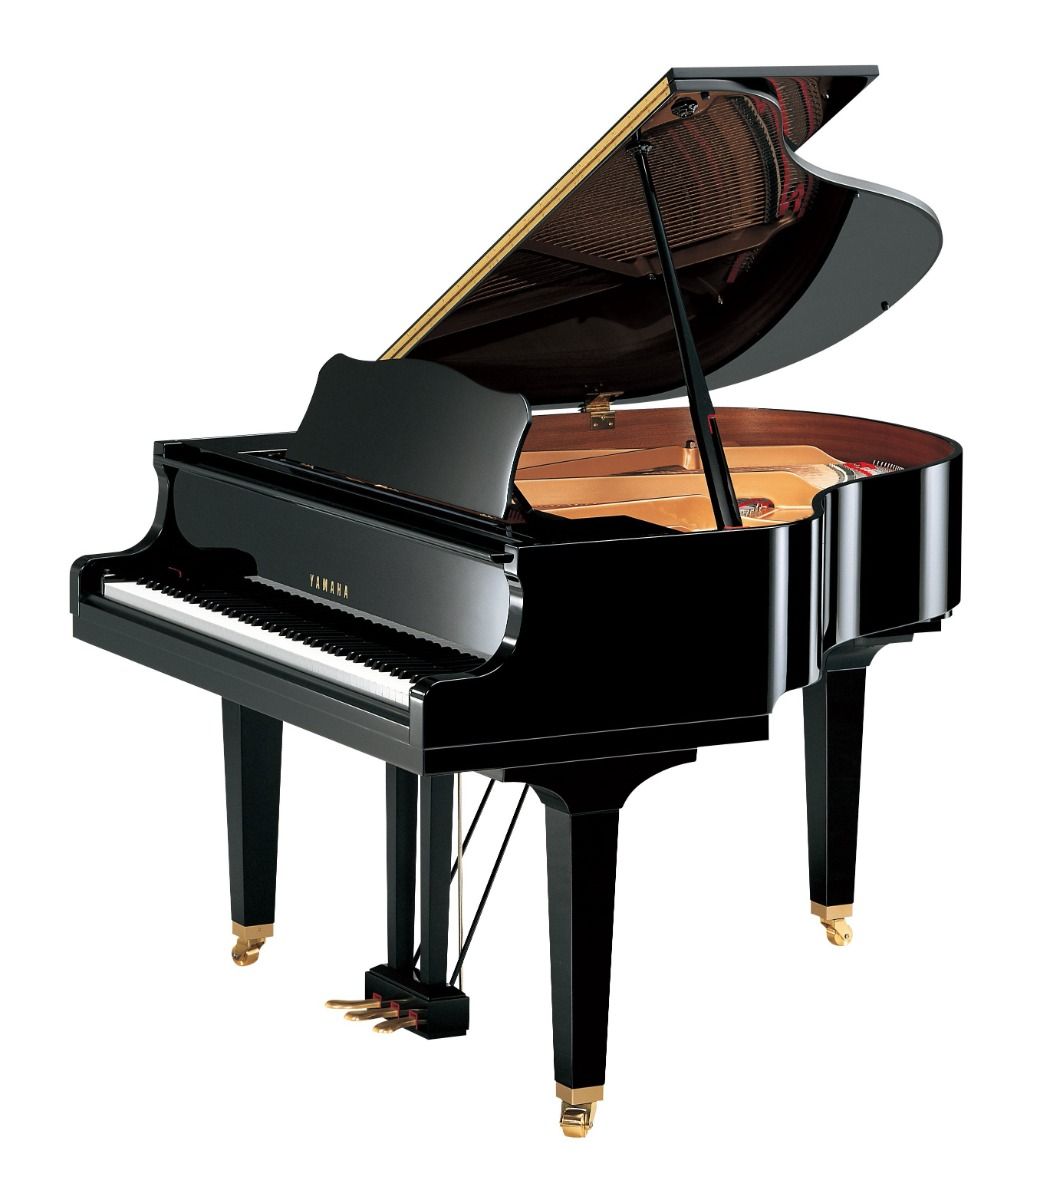 The Yamaha GB1K 5′ Grand Piano